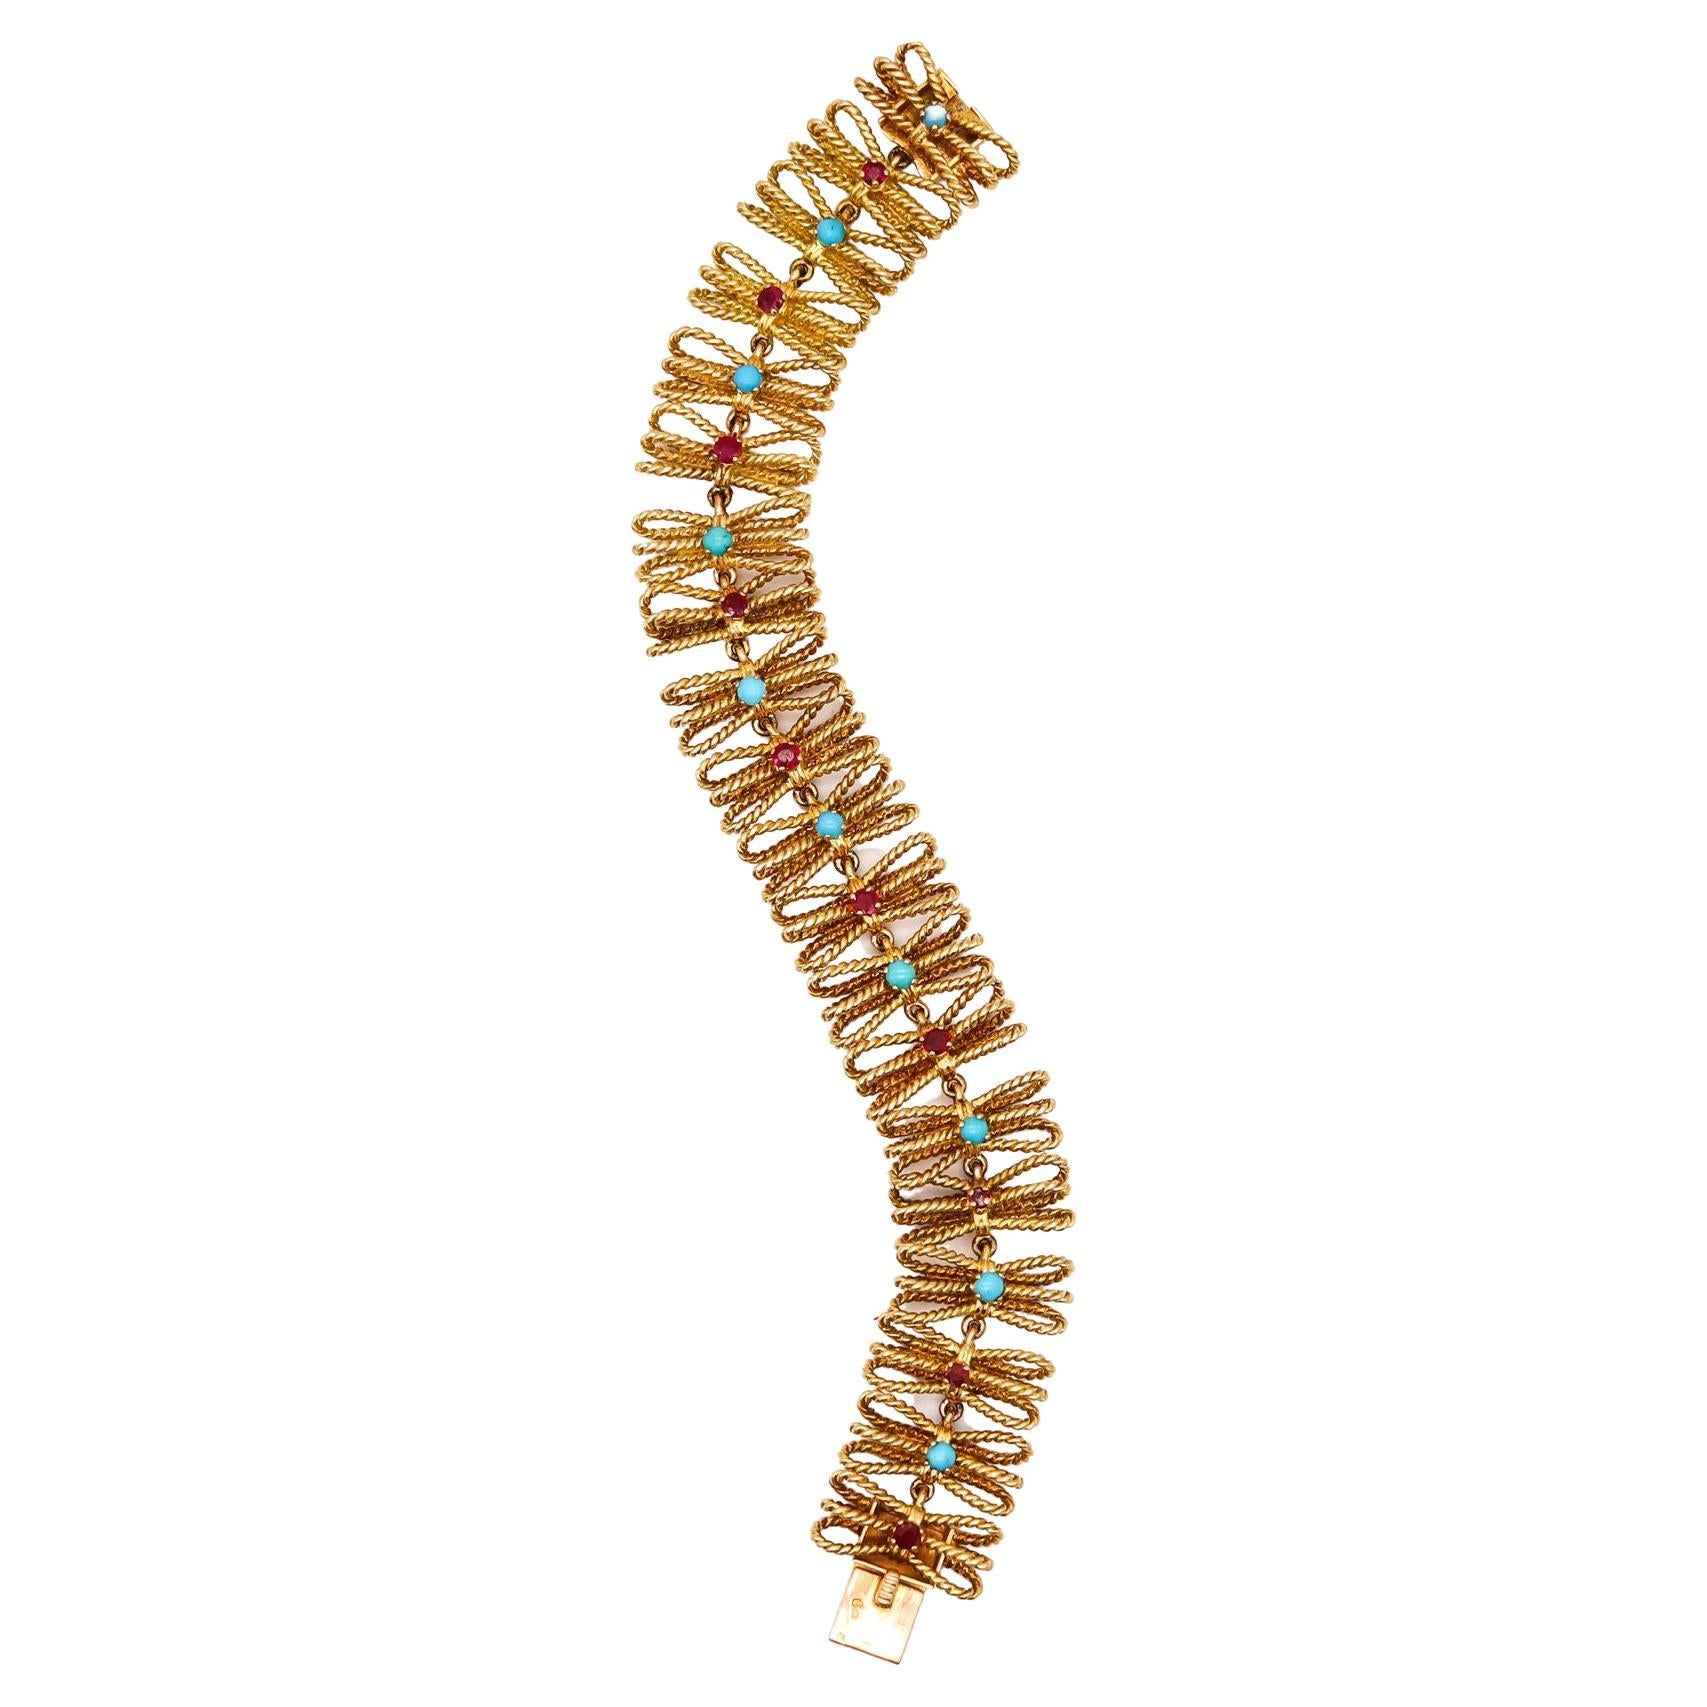 Mellerio-Dits Meller 1950 Paris gedrehtes Armband aus 18 Karat Gold mit 2,55 Karat Edelsteinen